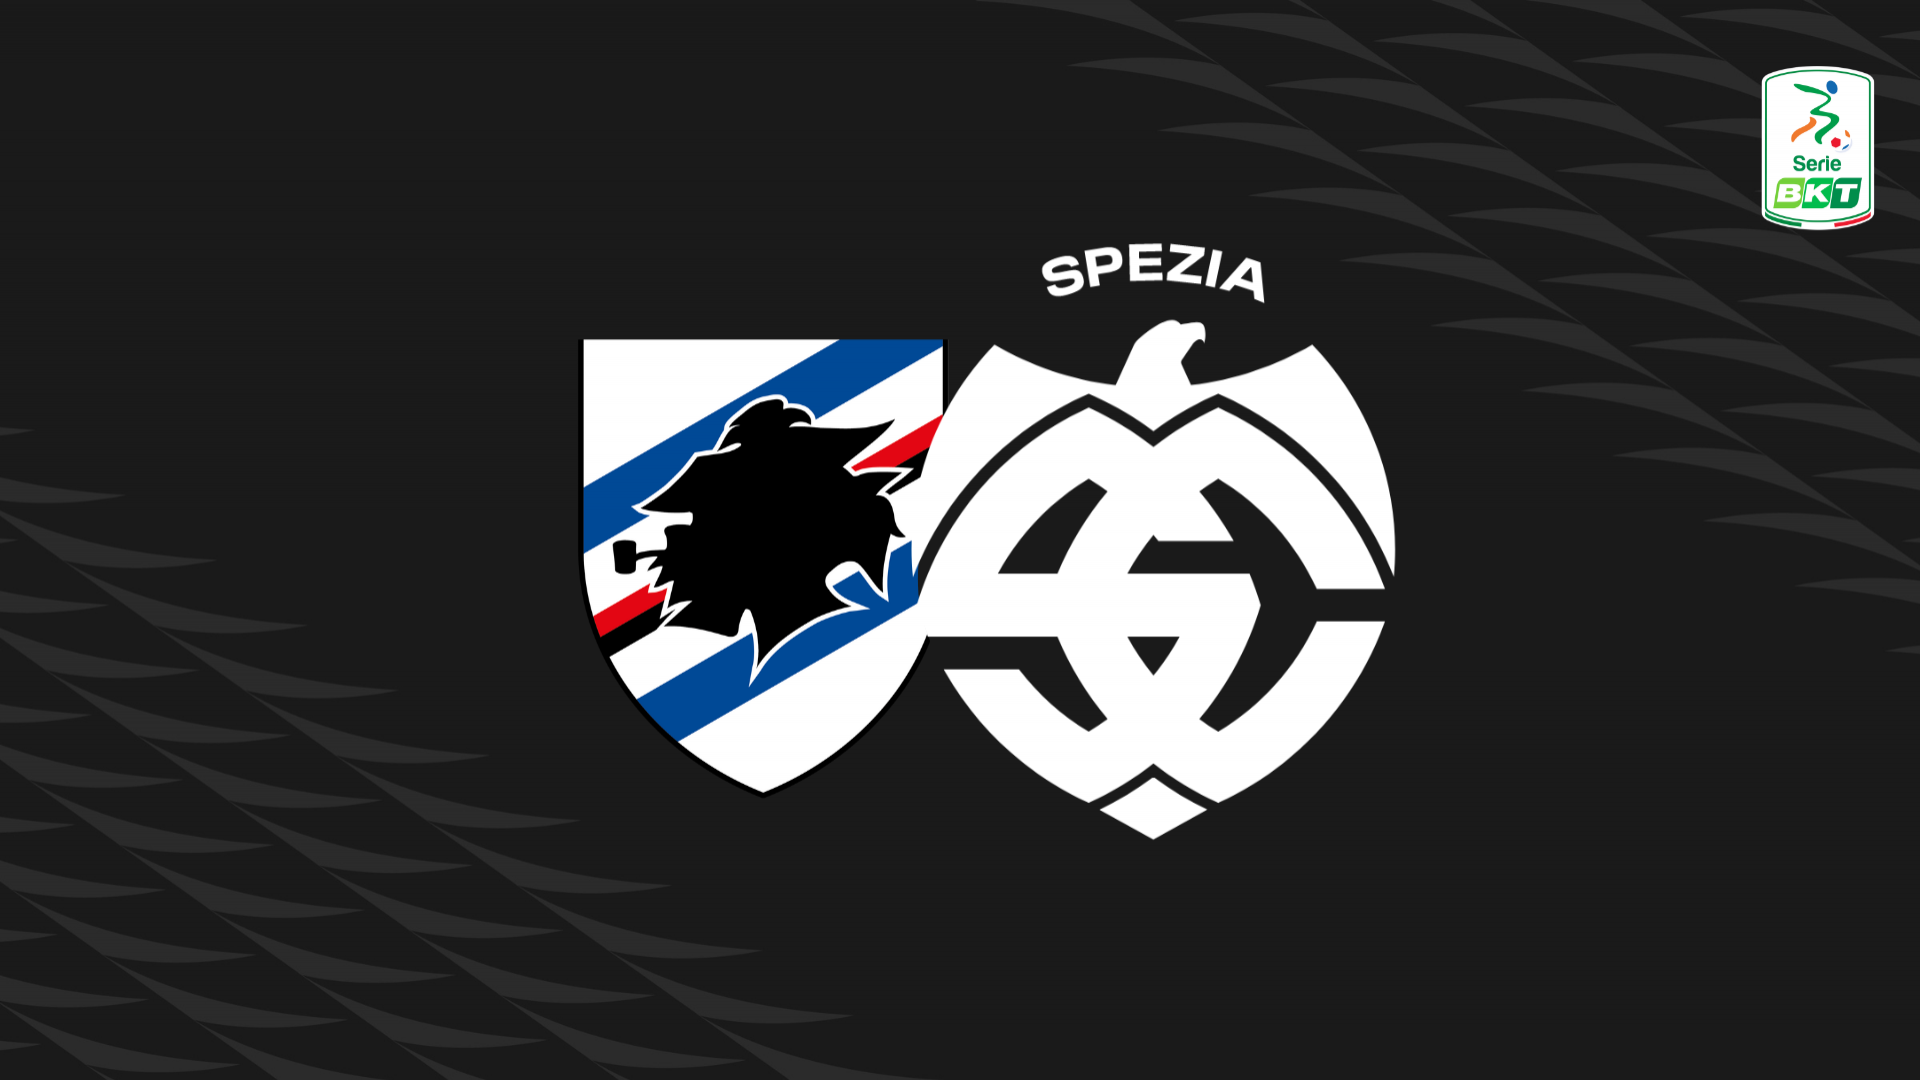 Serie BKT: Sampdoria-Spezia 2-1